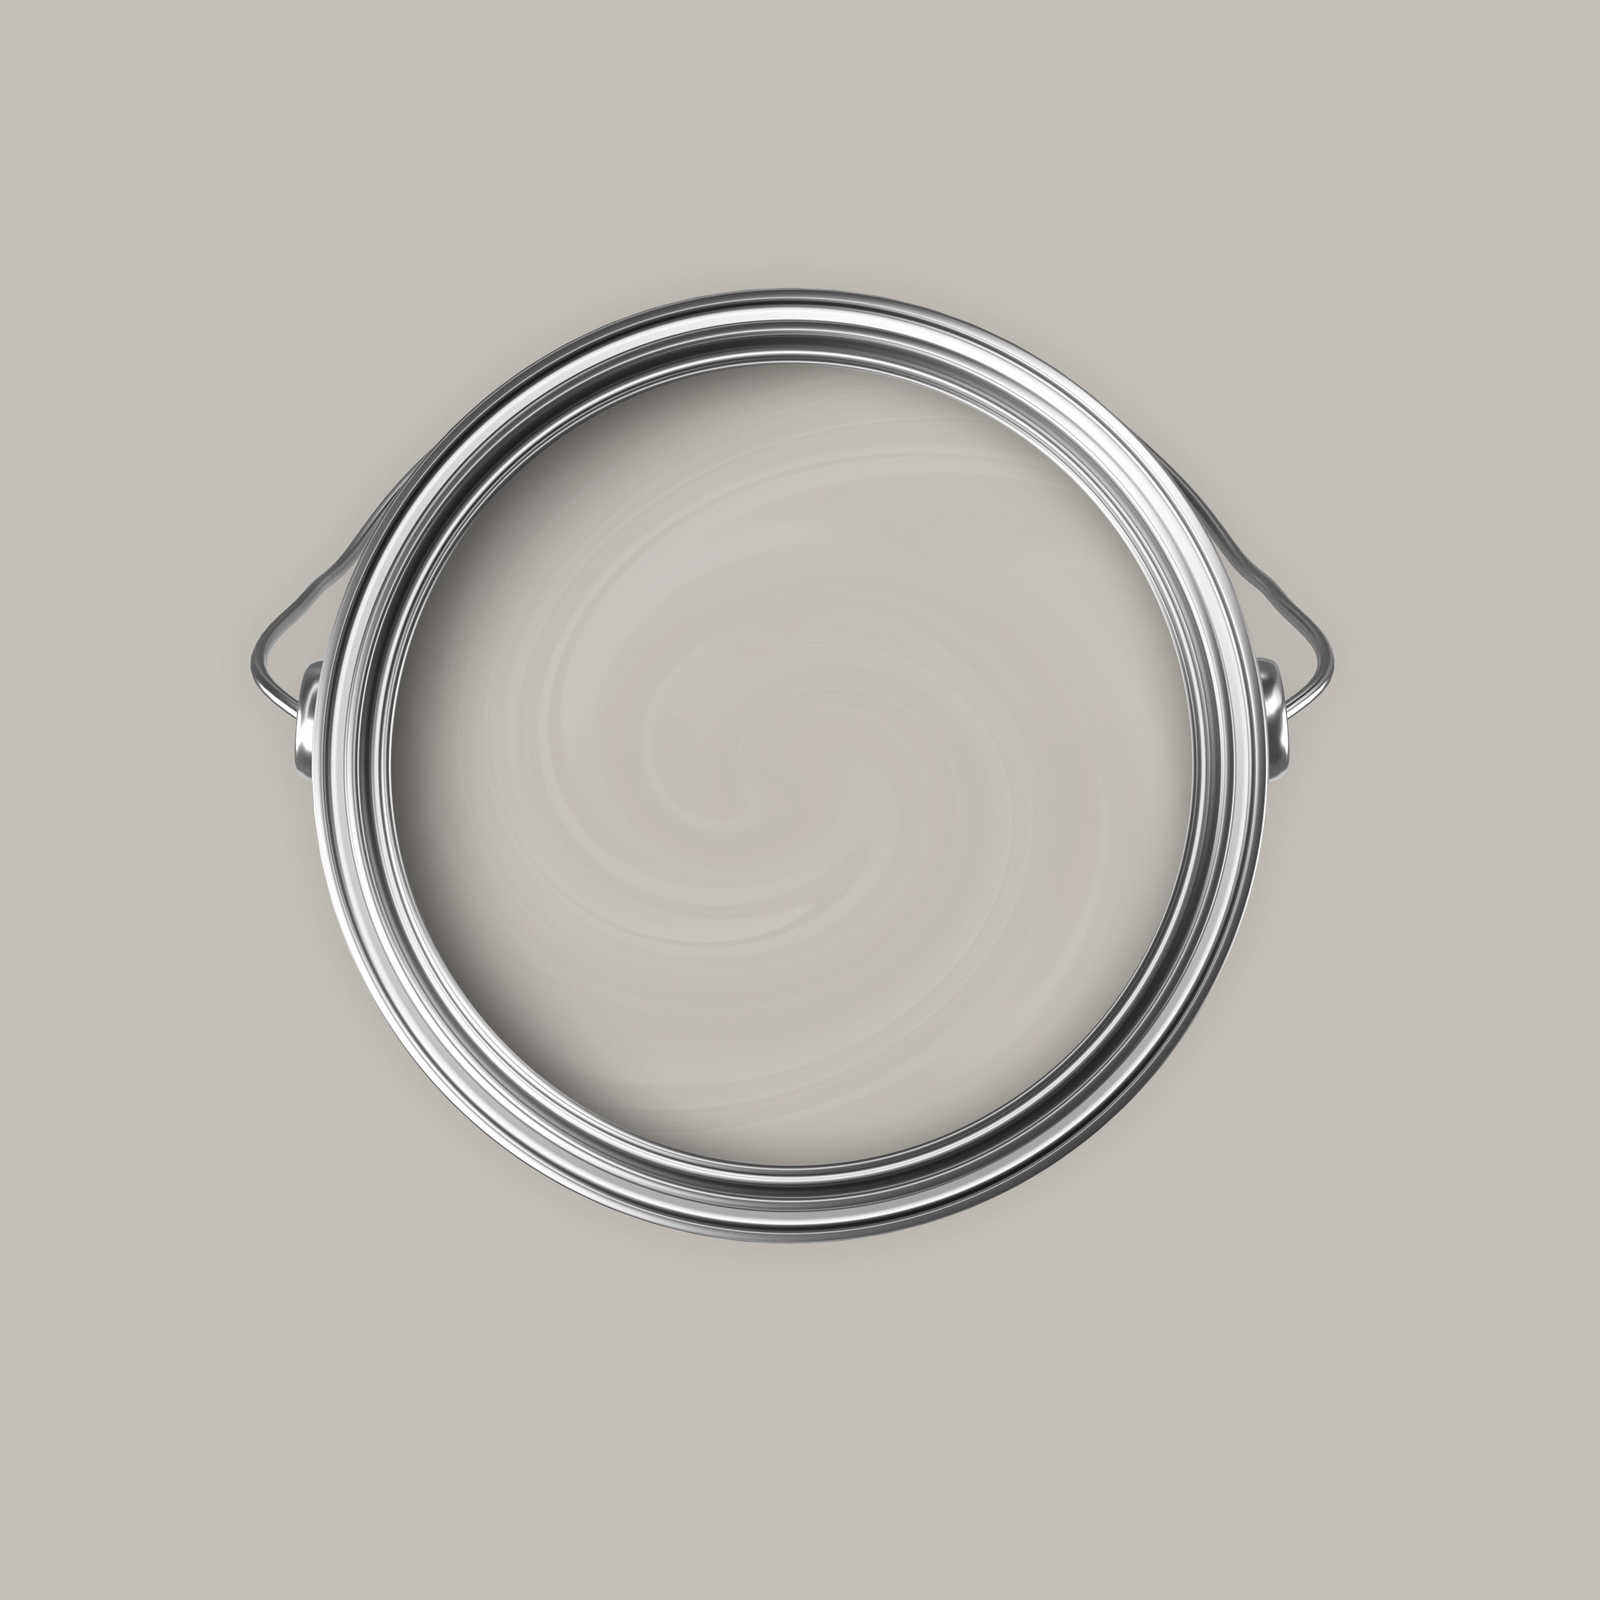             Pittura murale Premium grigio seta »Creamy Grey« NW111 – 5 litri
        